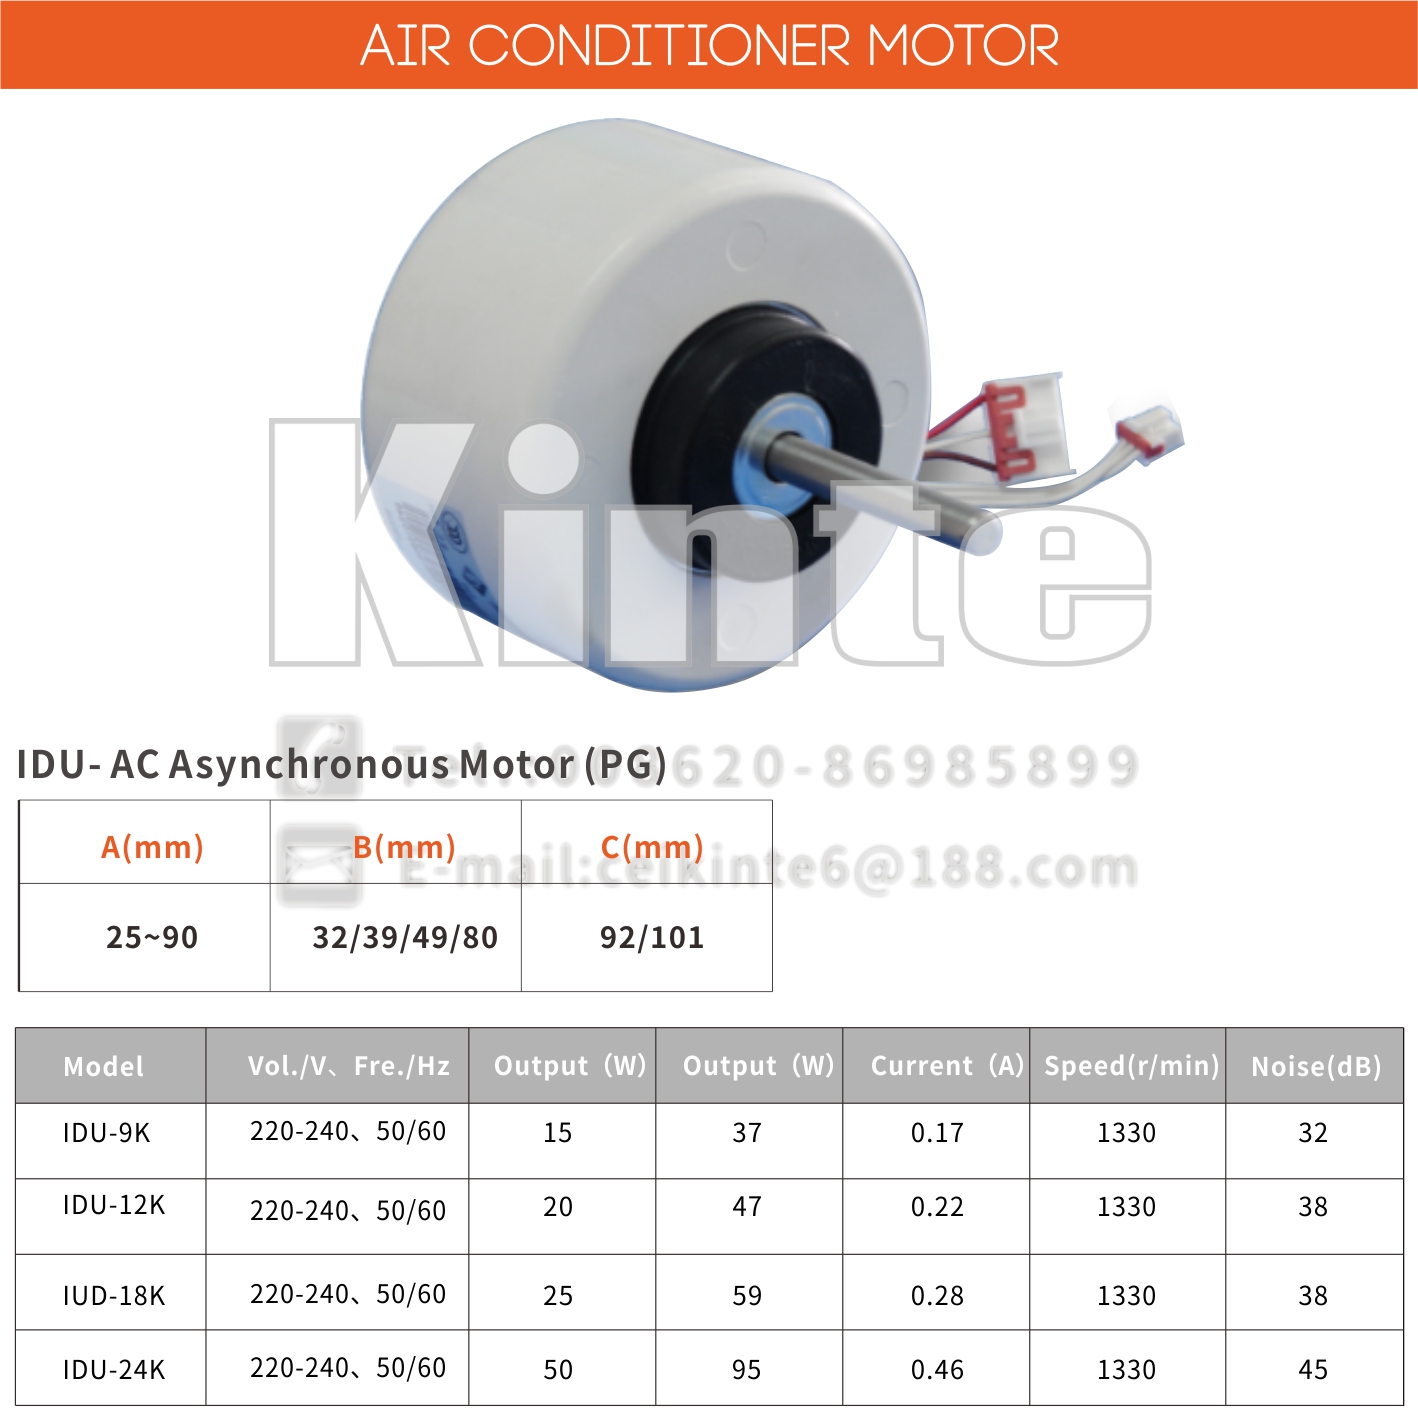 Air-conditioner motor